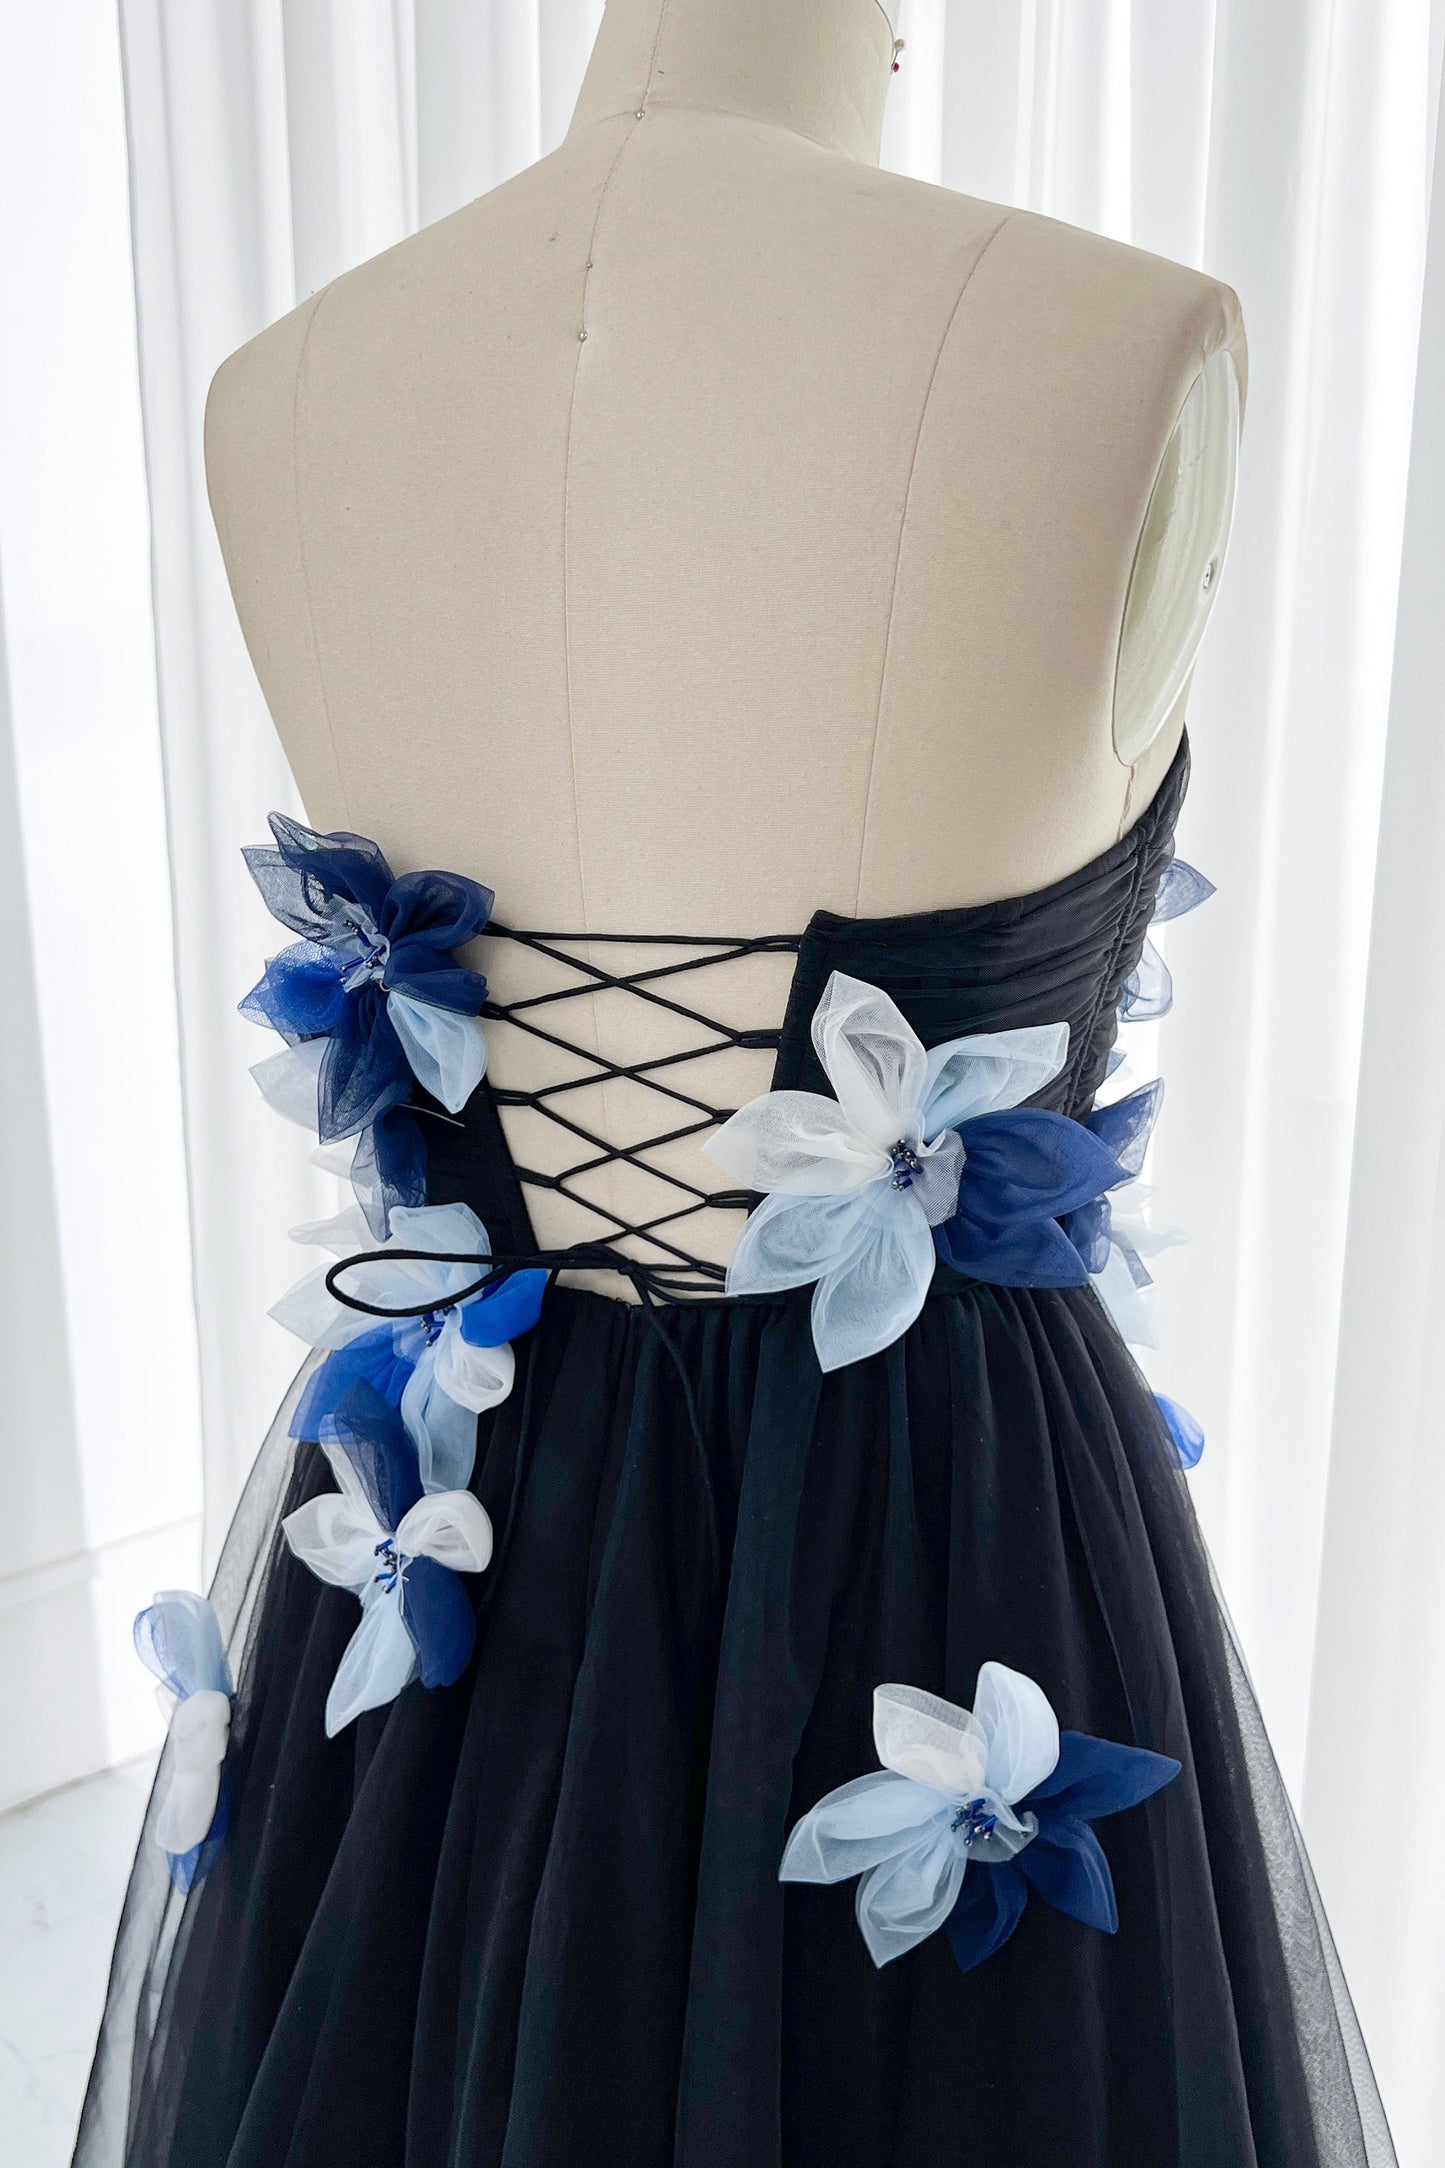 MissJophiel Strapless Black Tulle with Blue and white Flowers Midi Dress